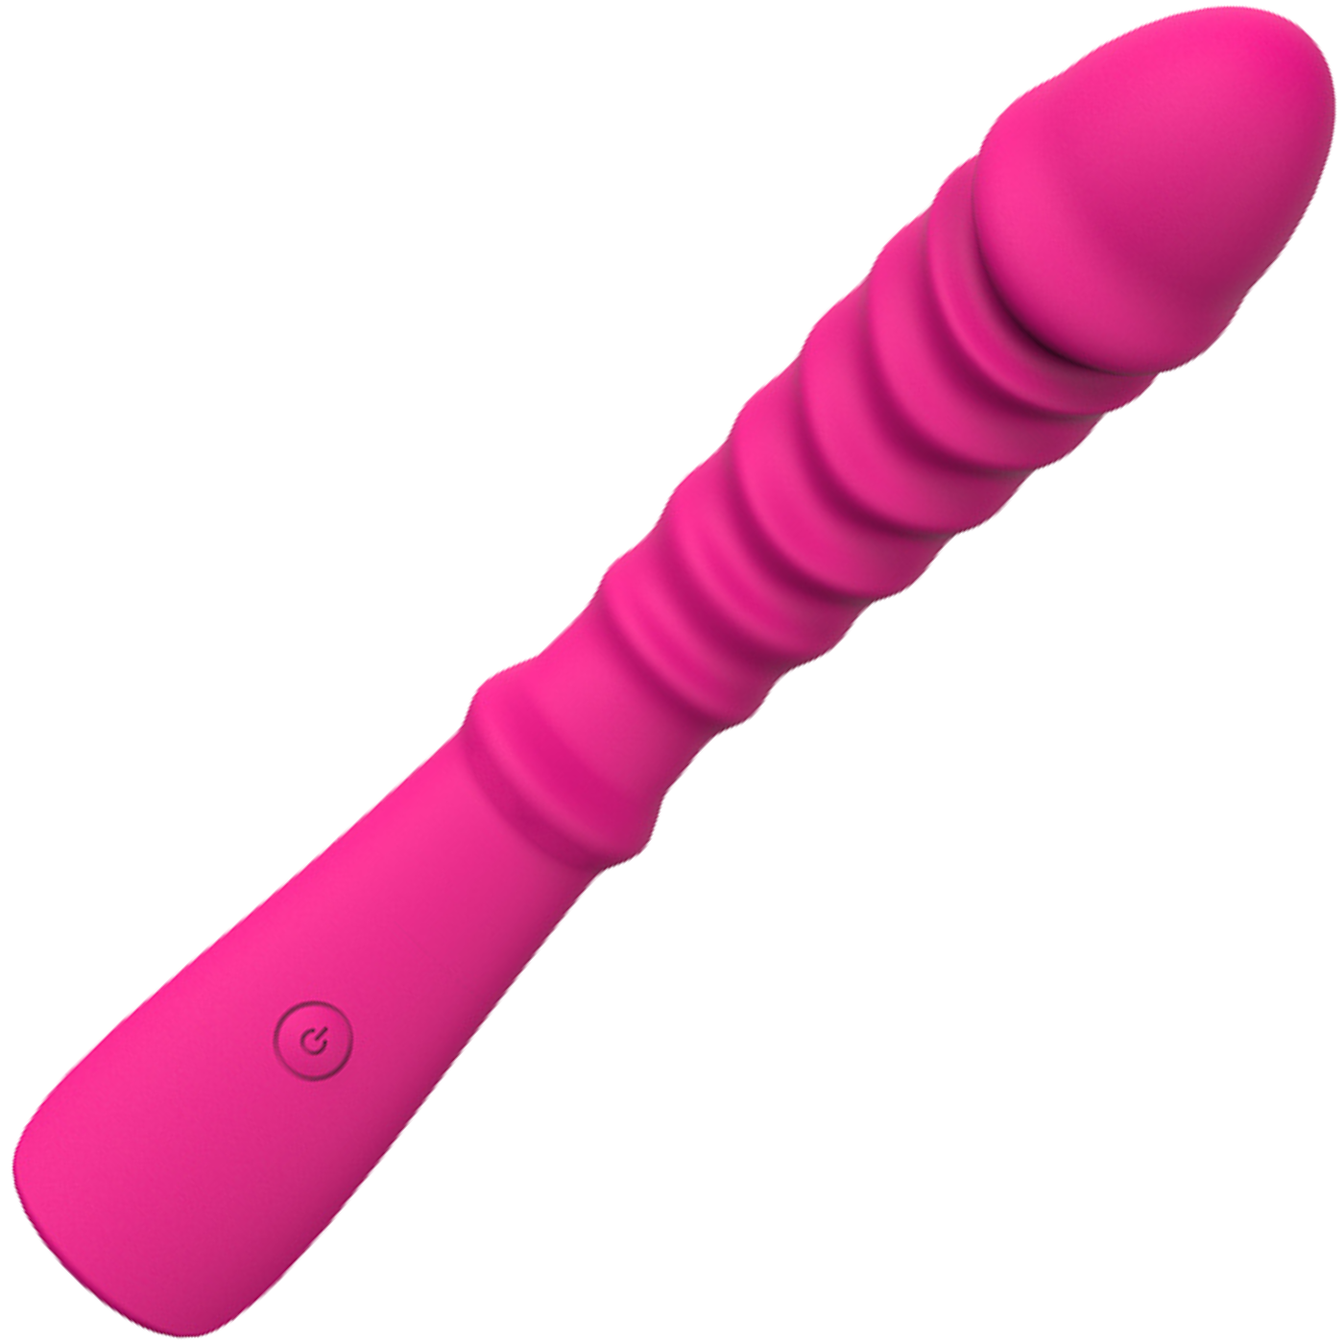 Bright pink rippled g-spot toy